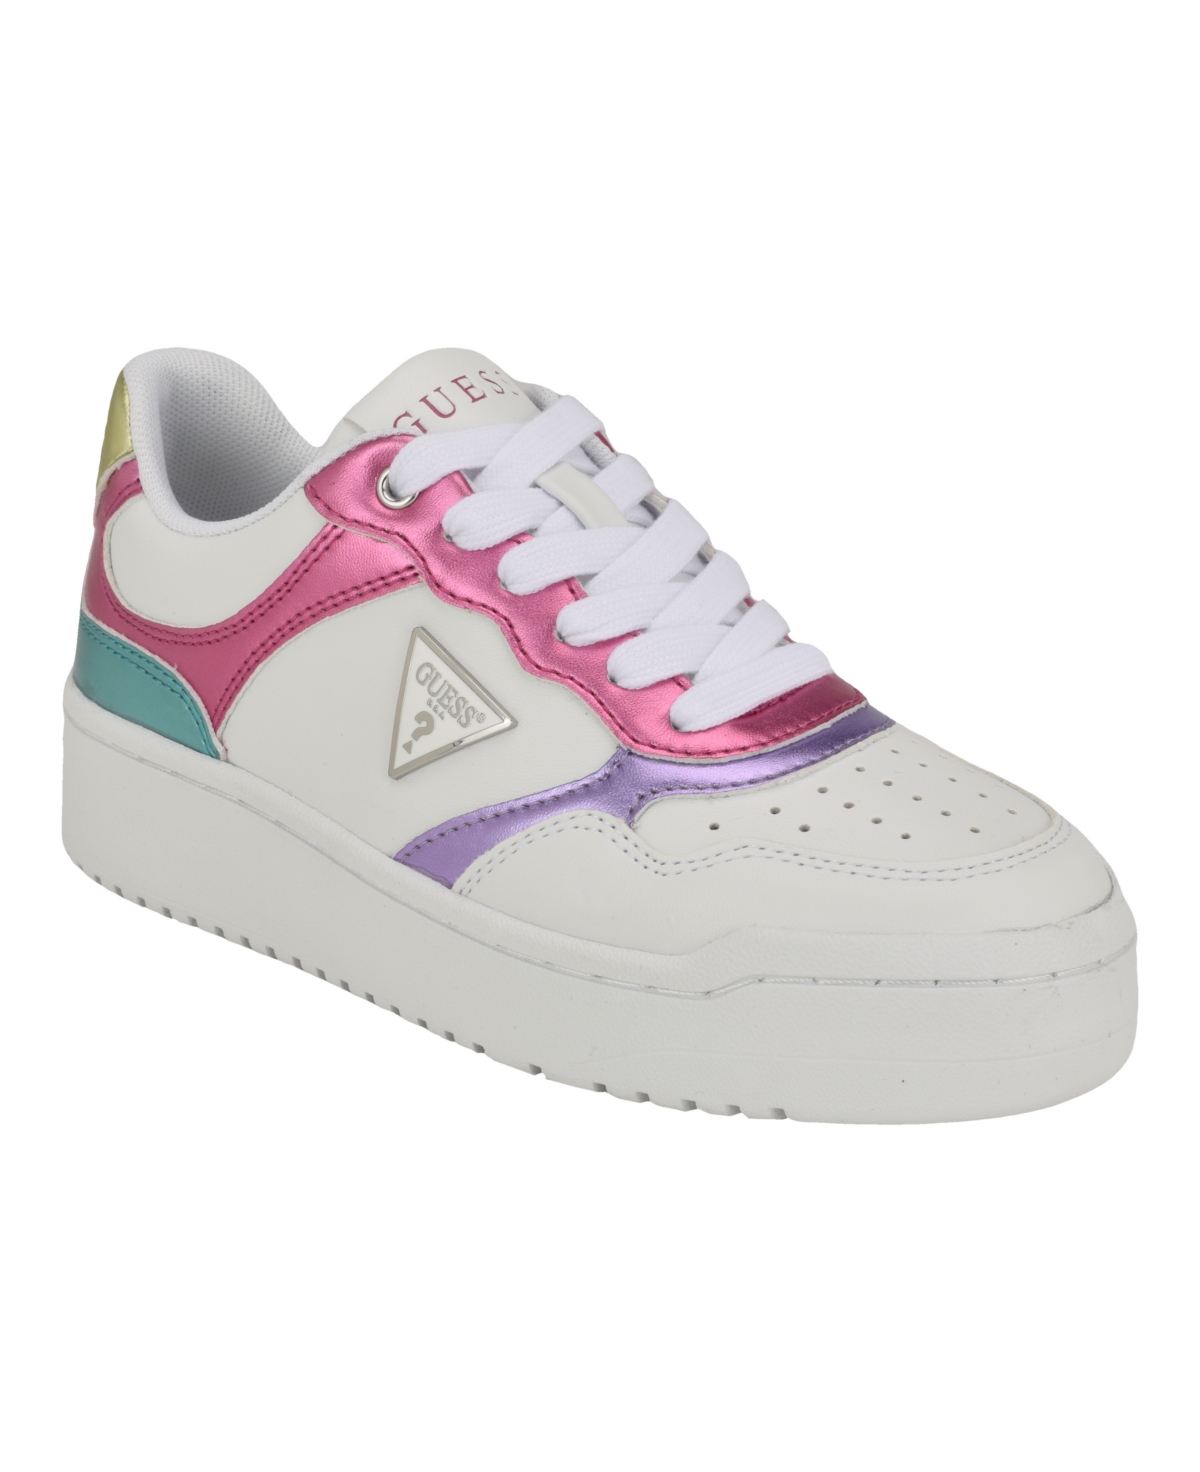 Guess Women's Miram Platform Lace-up Court Sneakers In Pink Pastel Metallic Multi,white